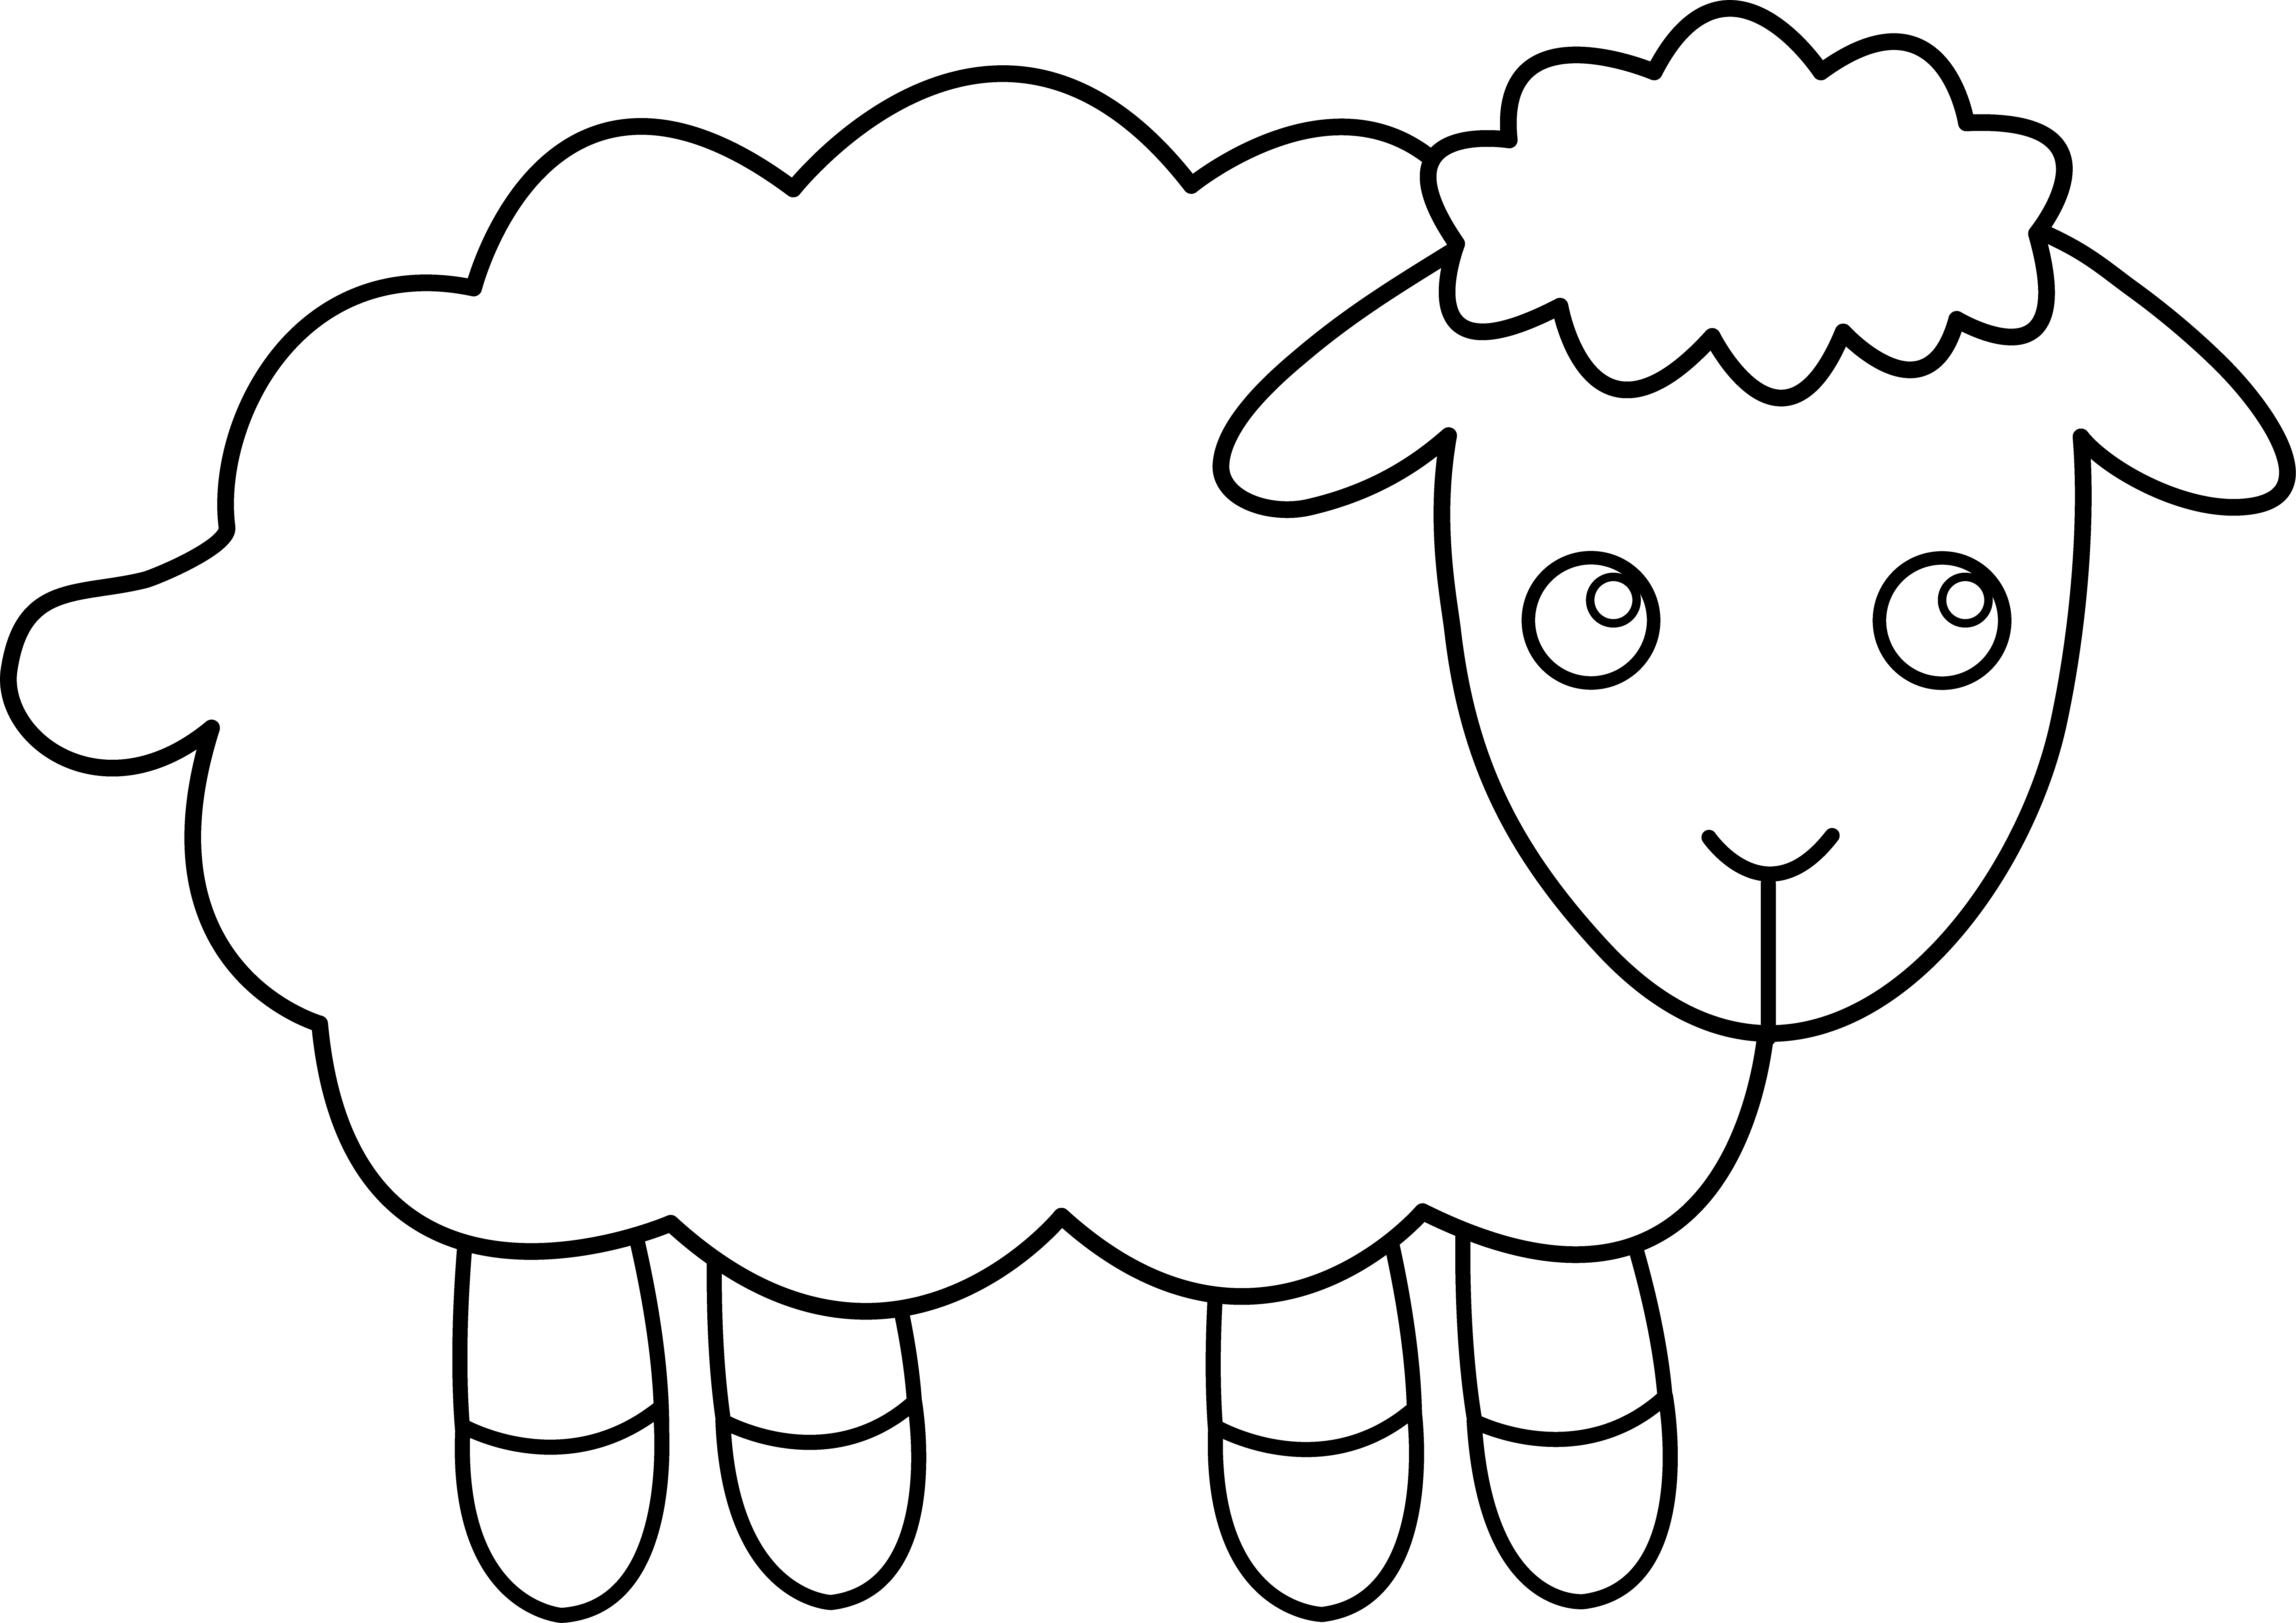 Home clipart sheep. Lamb and cross clip